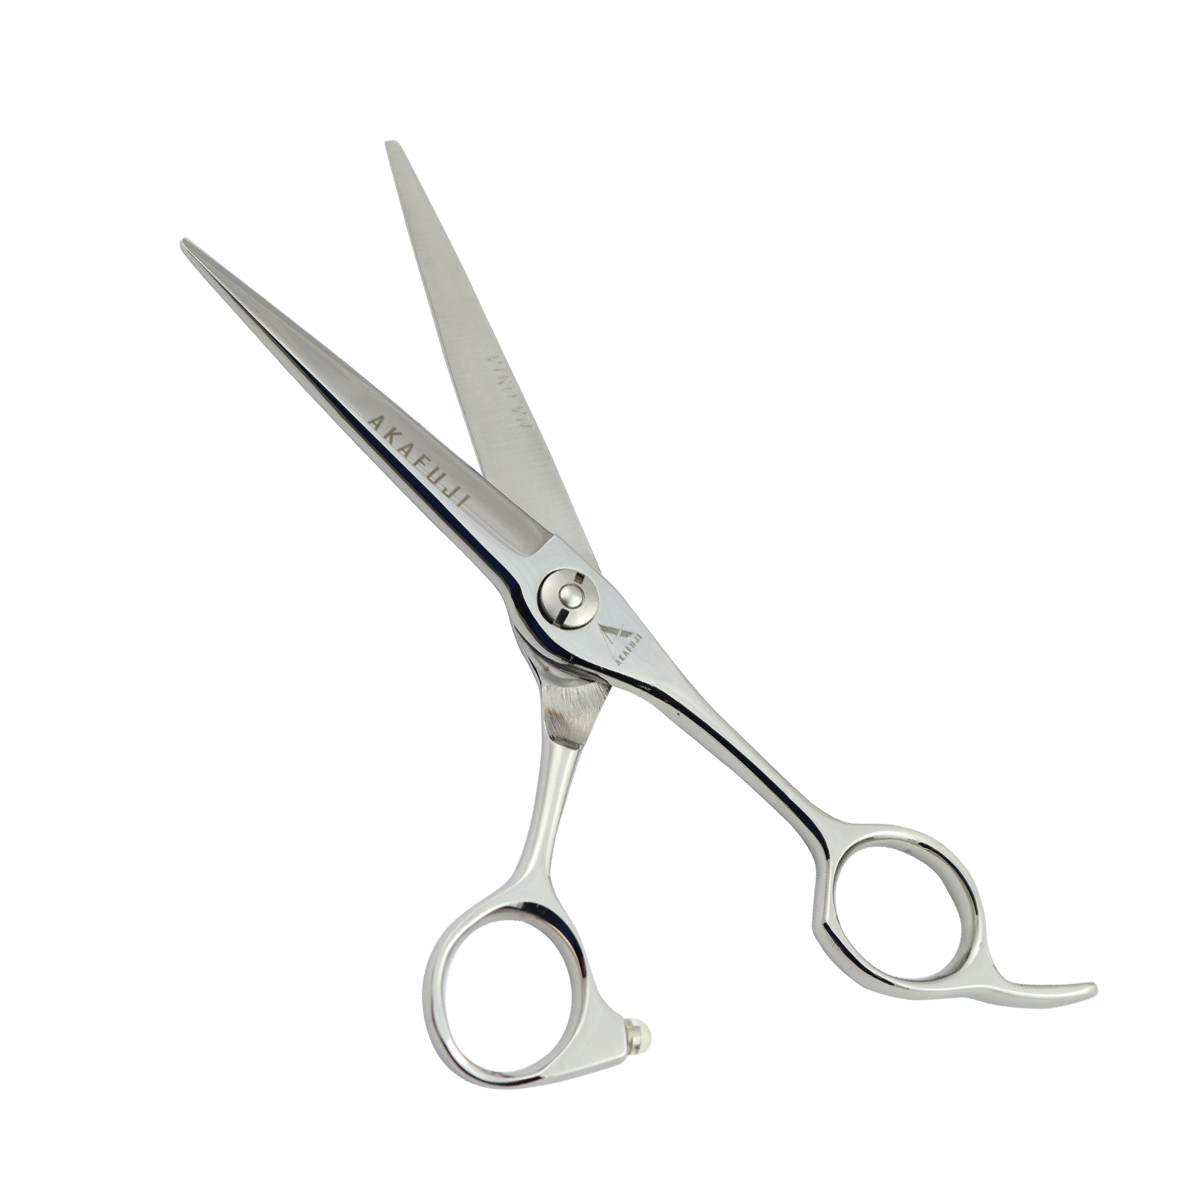 Kéo cắt tóc VIKO EA-603 (size 6.0 inches)